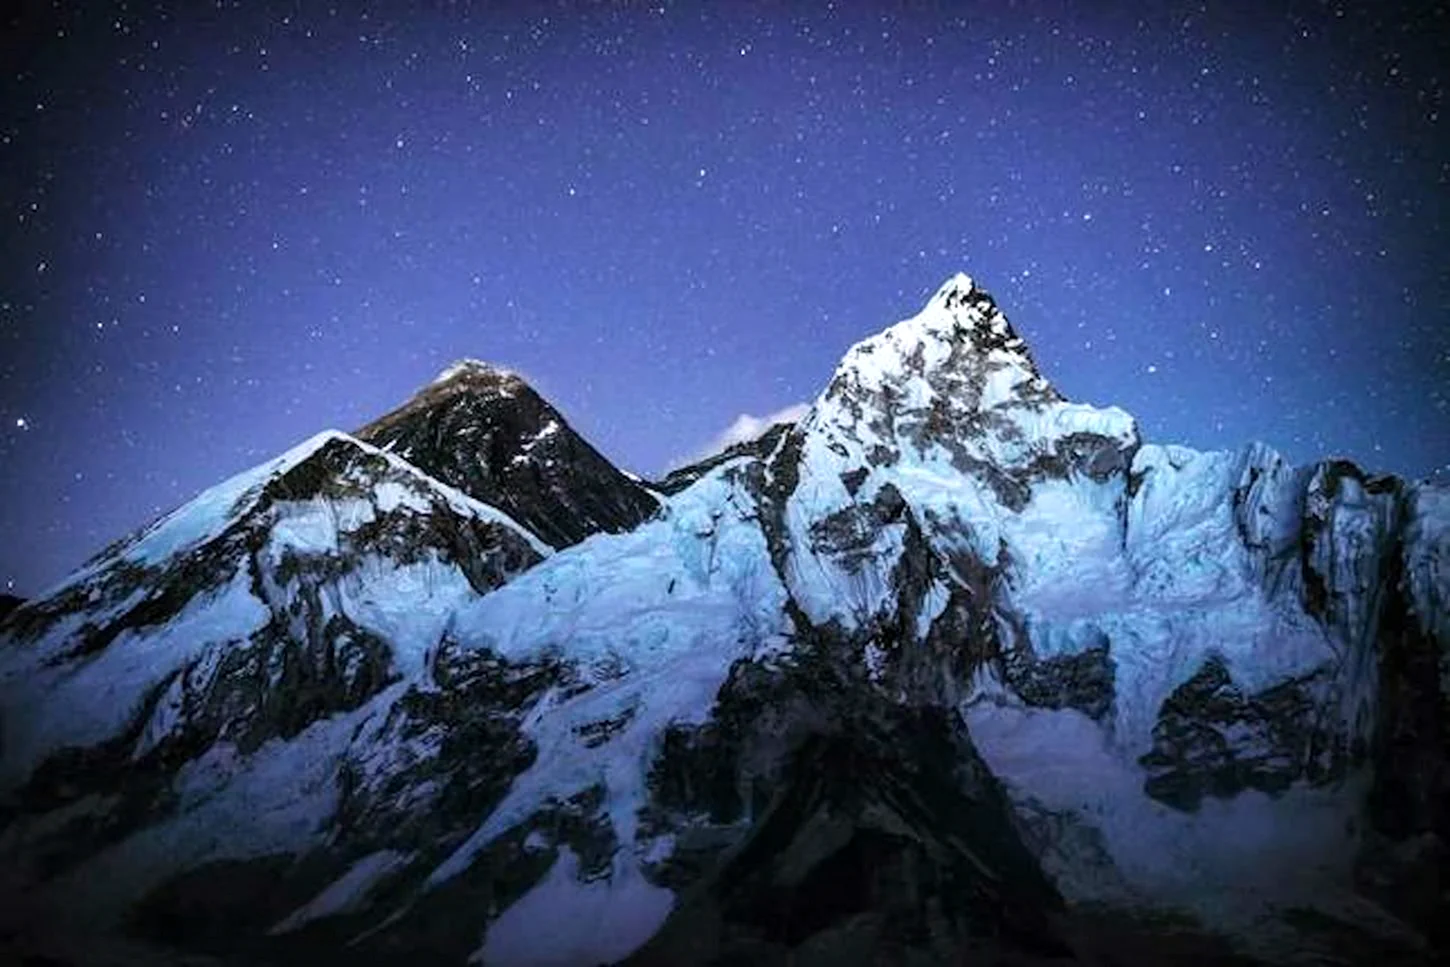 Гималаи Эверест